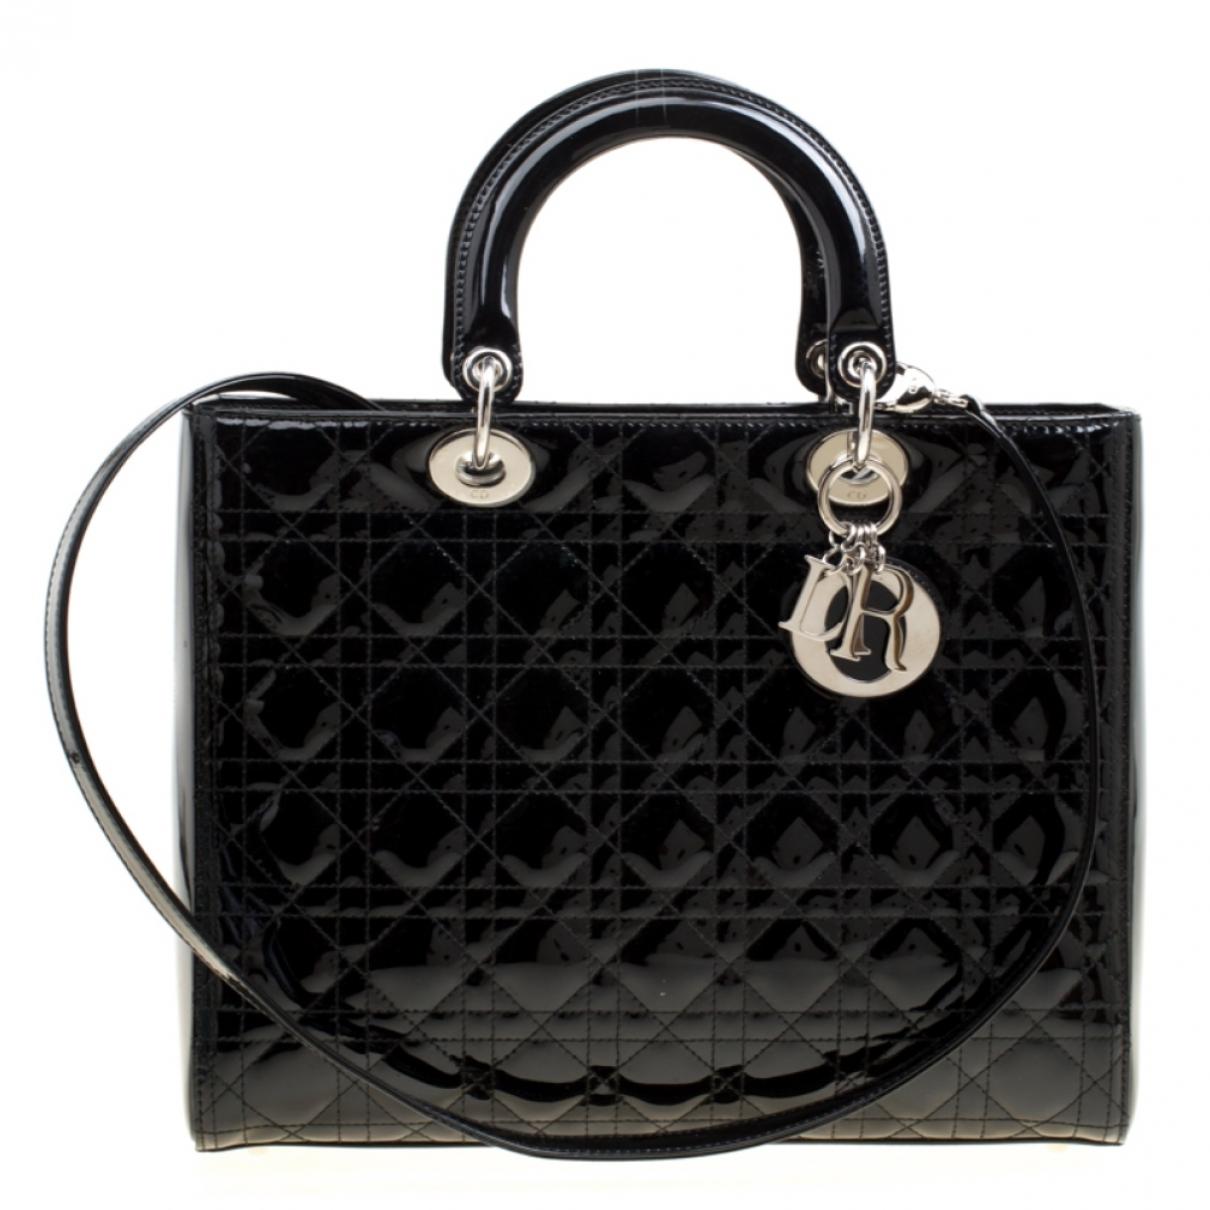 Dior Lady Black Patent Leather Handbag in Black - Lyst